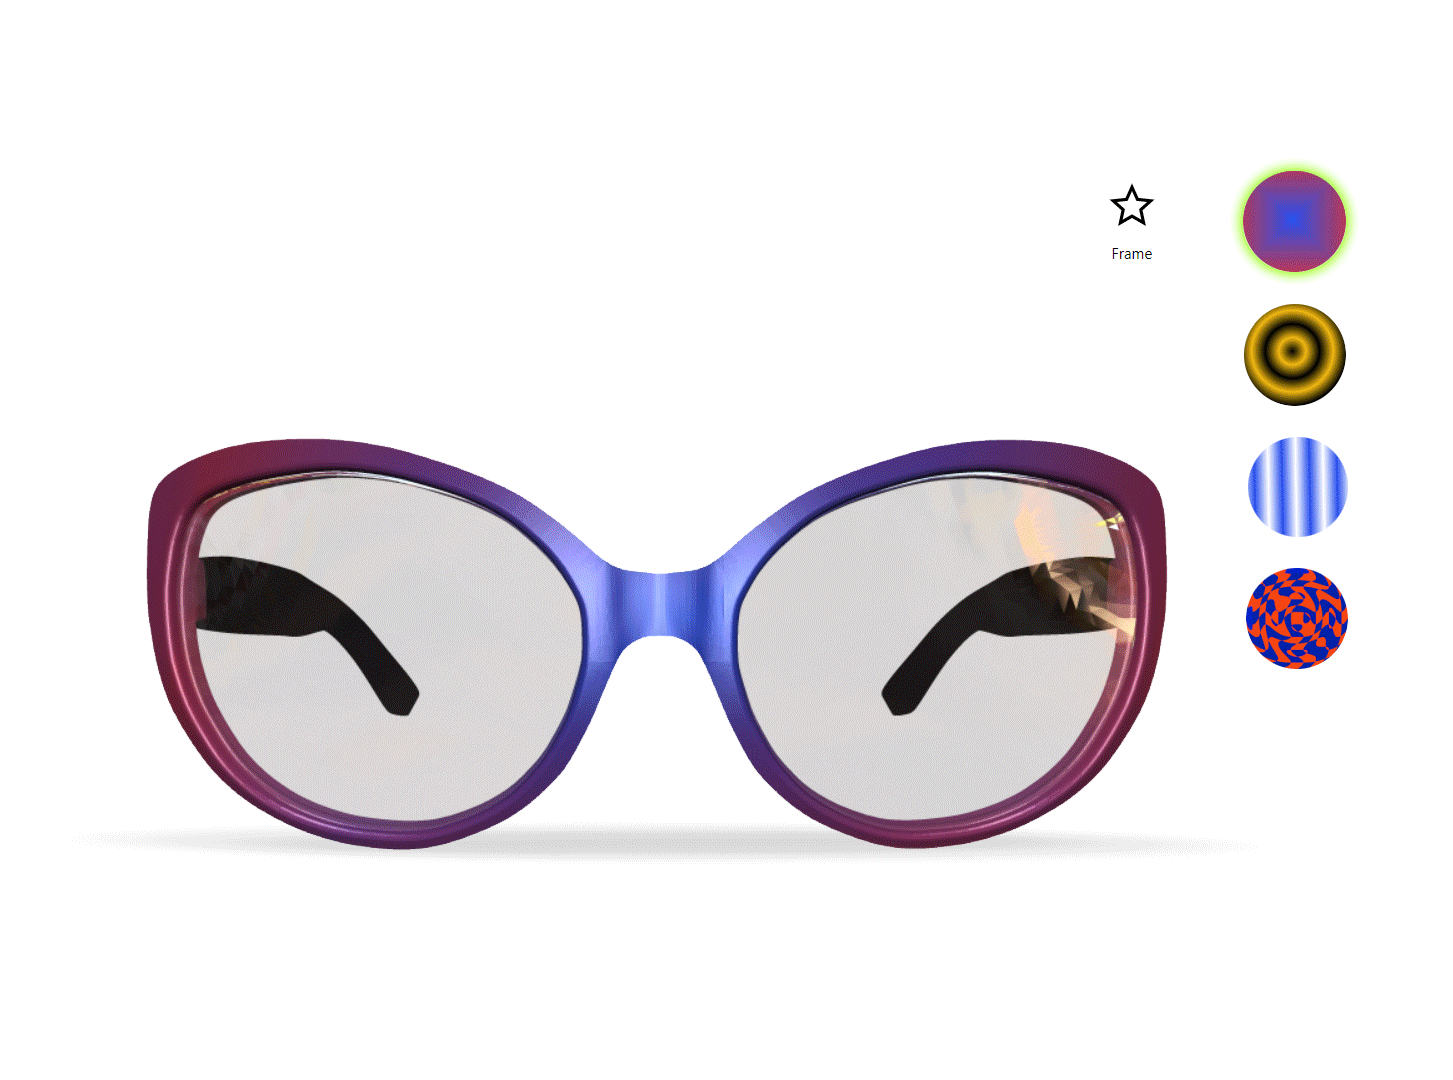 Custom glasses